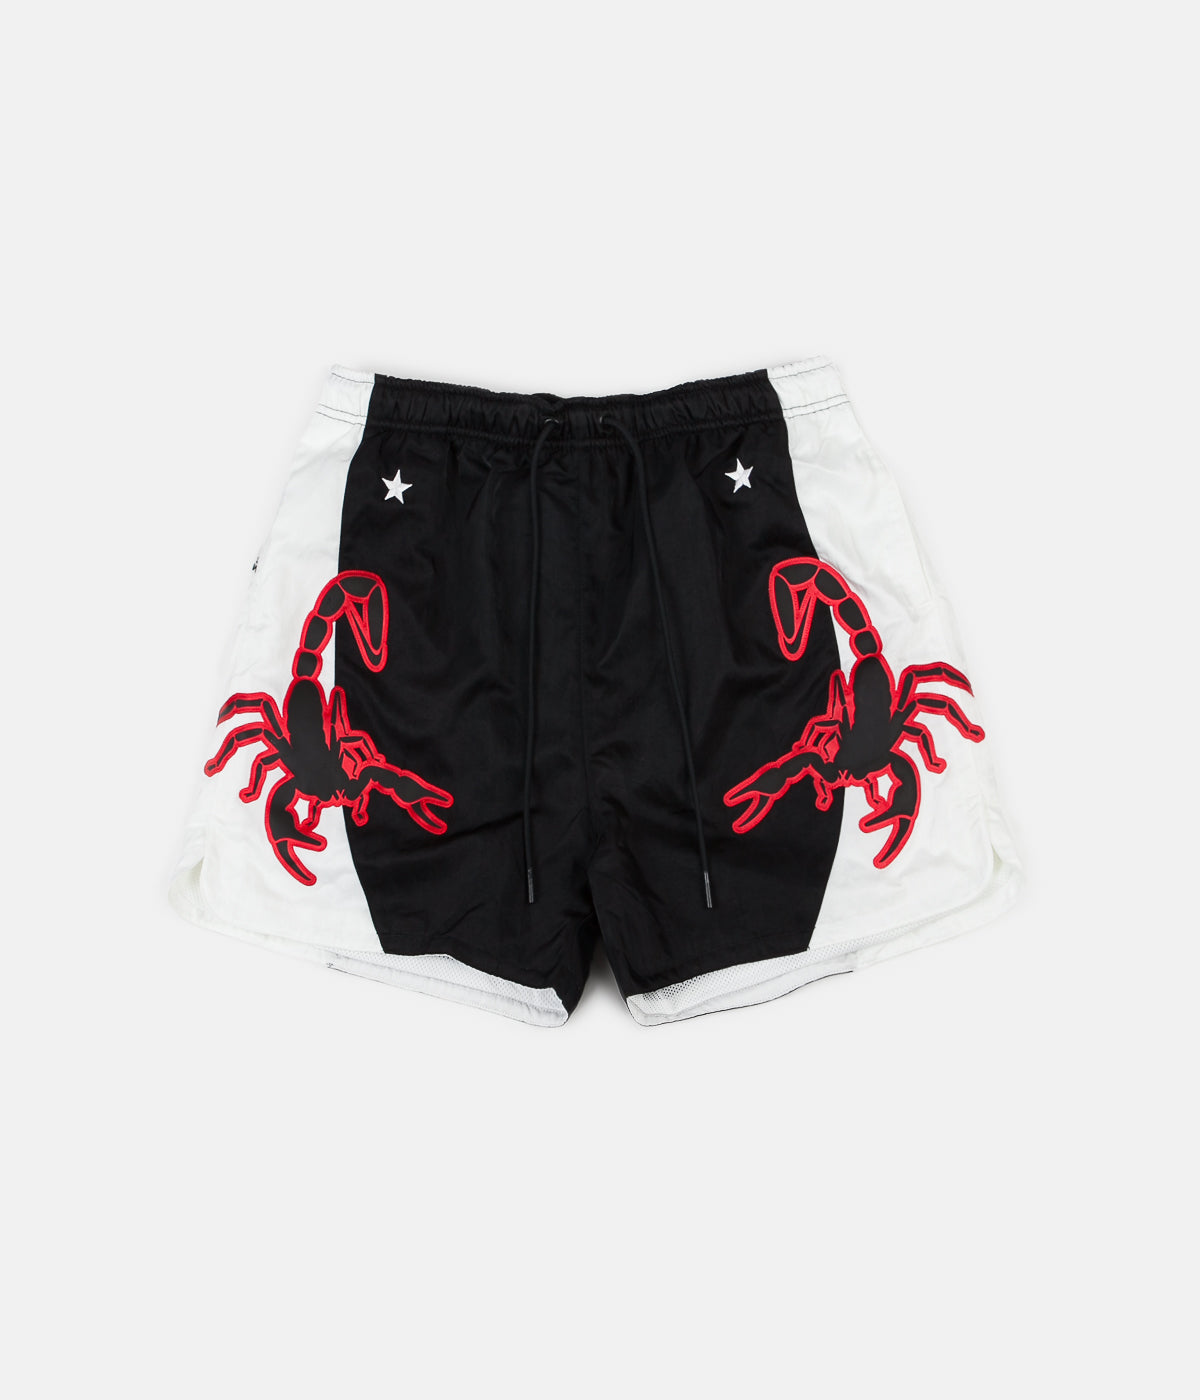 scorpion nike shorts